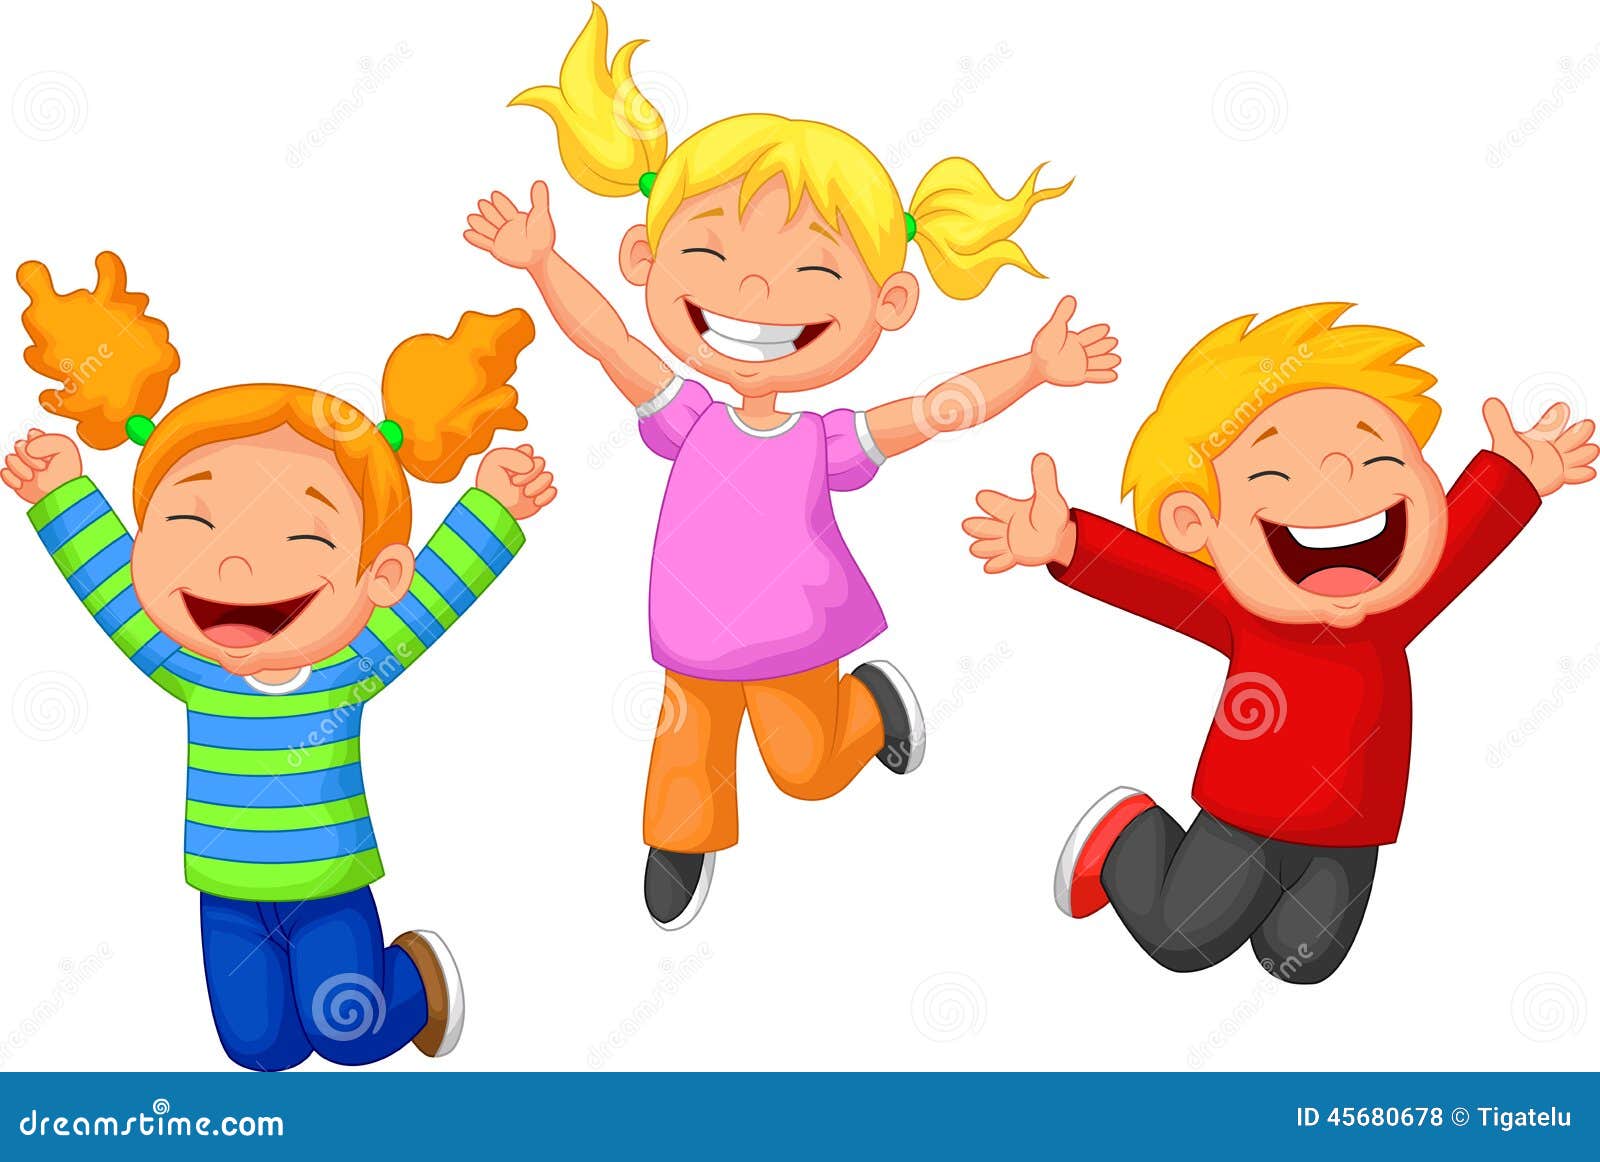 Happy kid cartoon stock vector. Illustration of laugh - 45680678